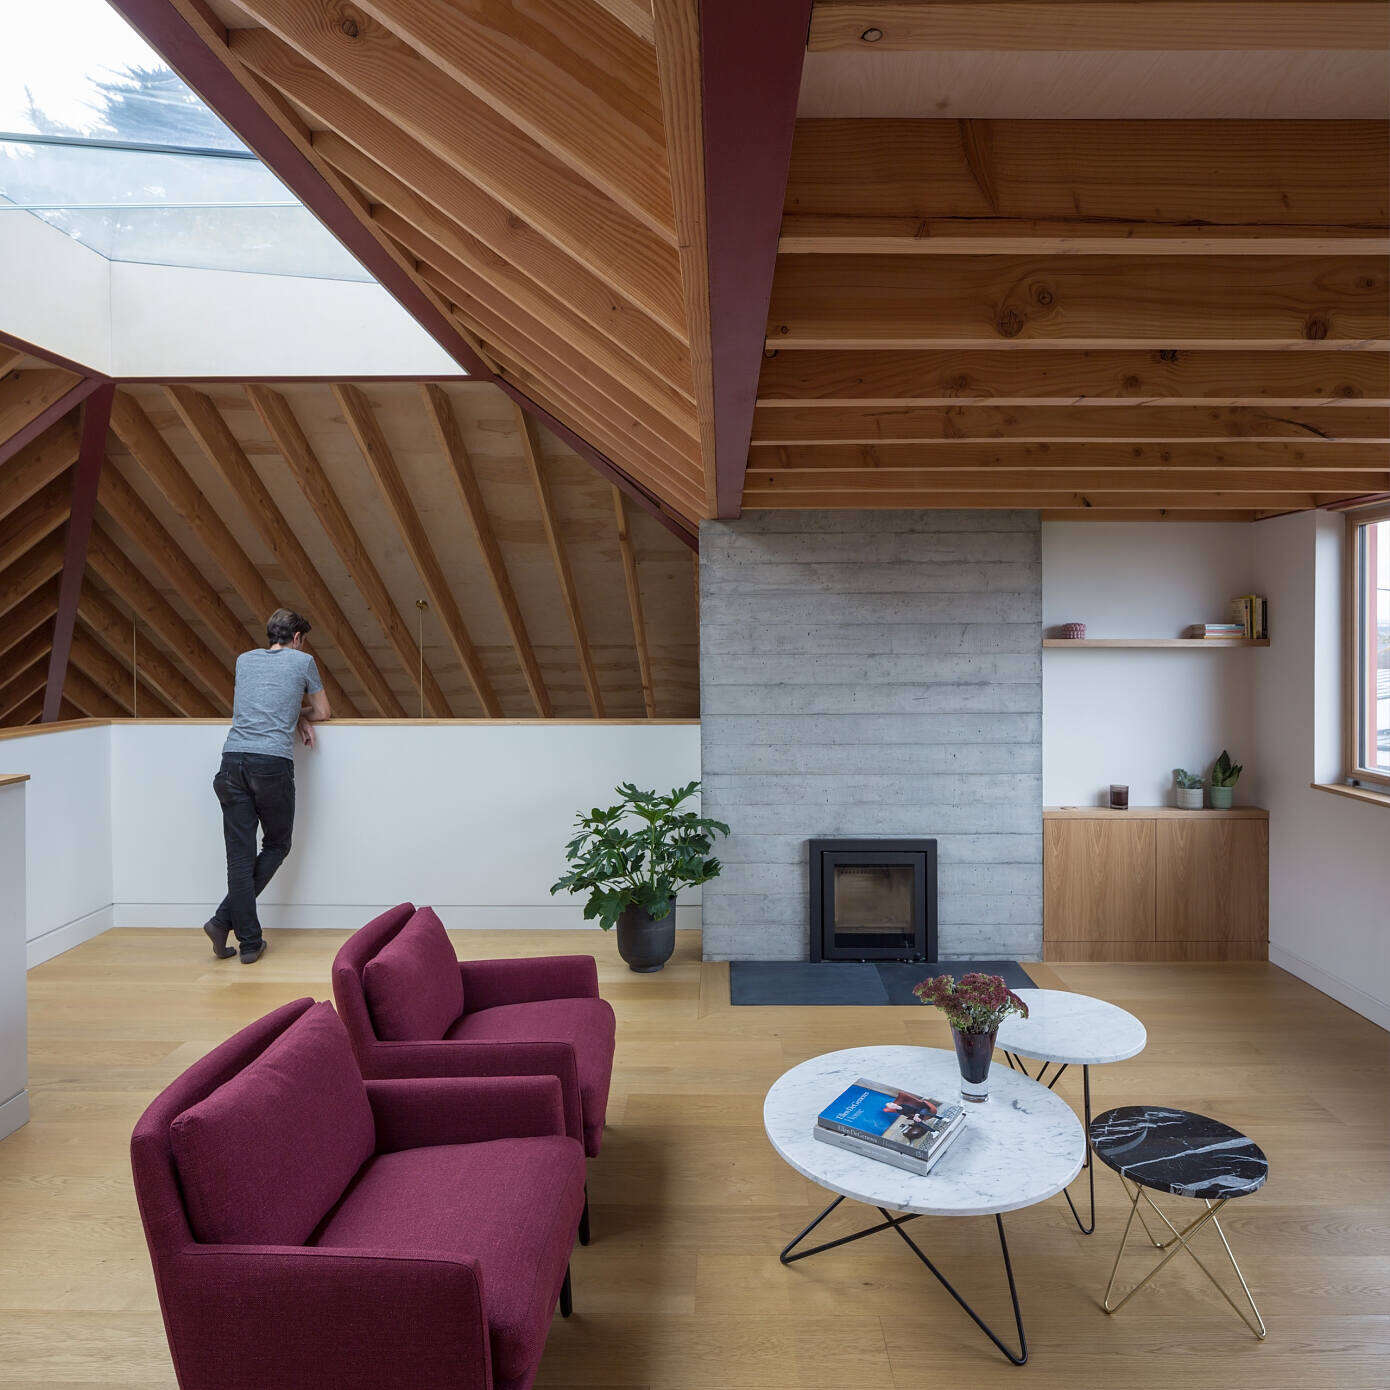 Pavilion House by Robert Bourke Architects